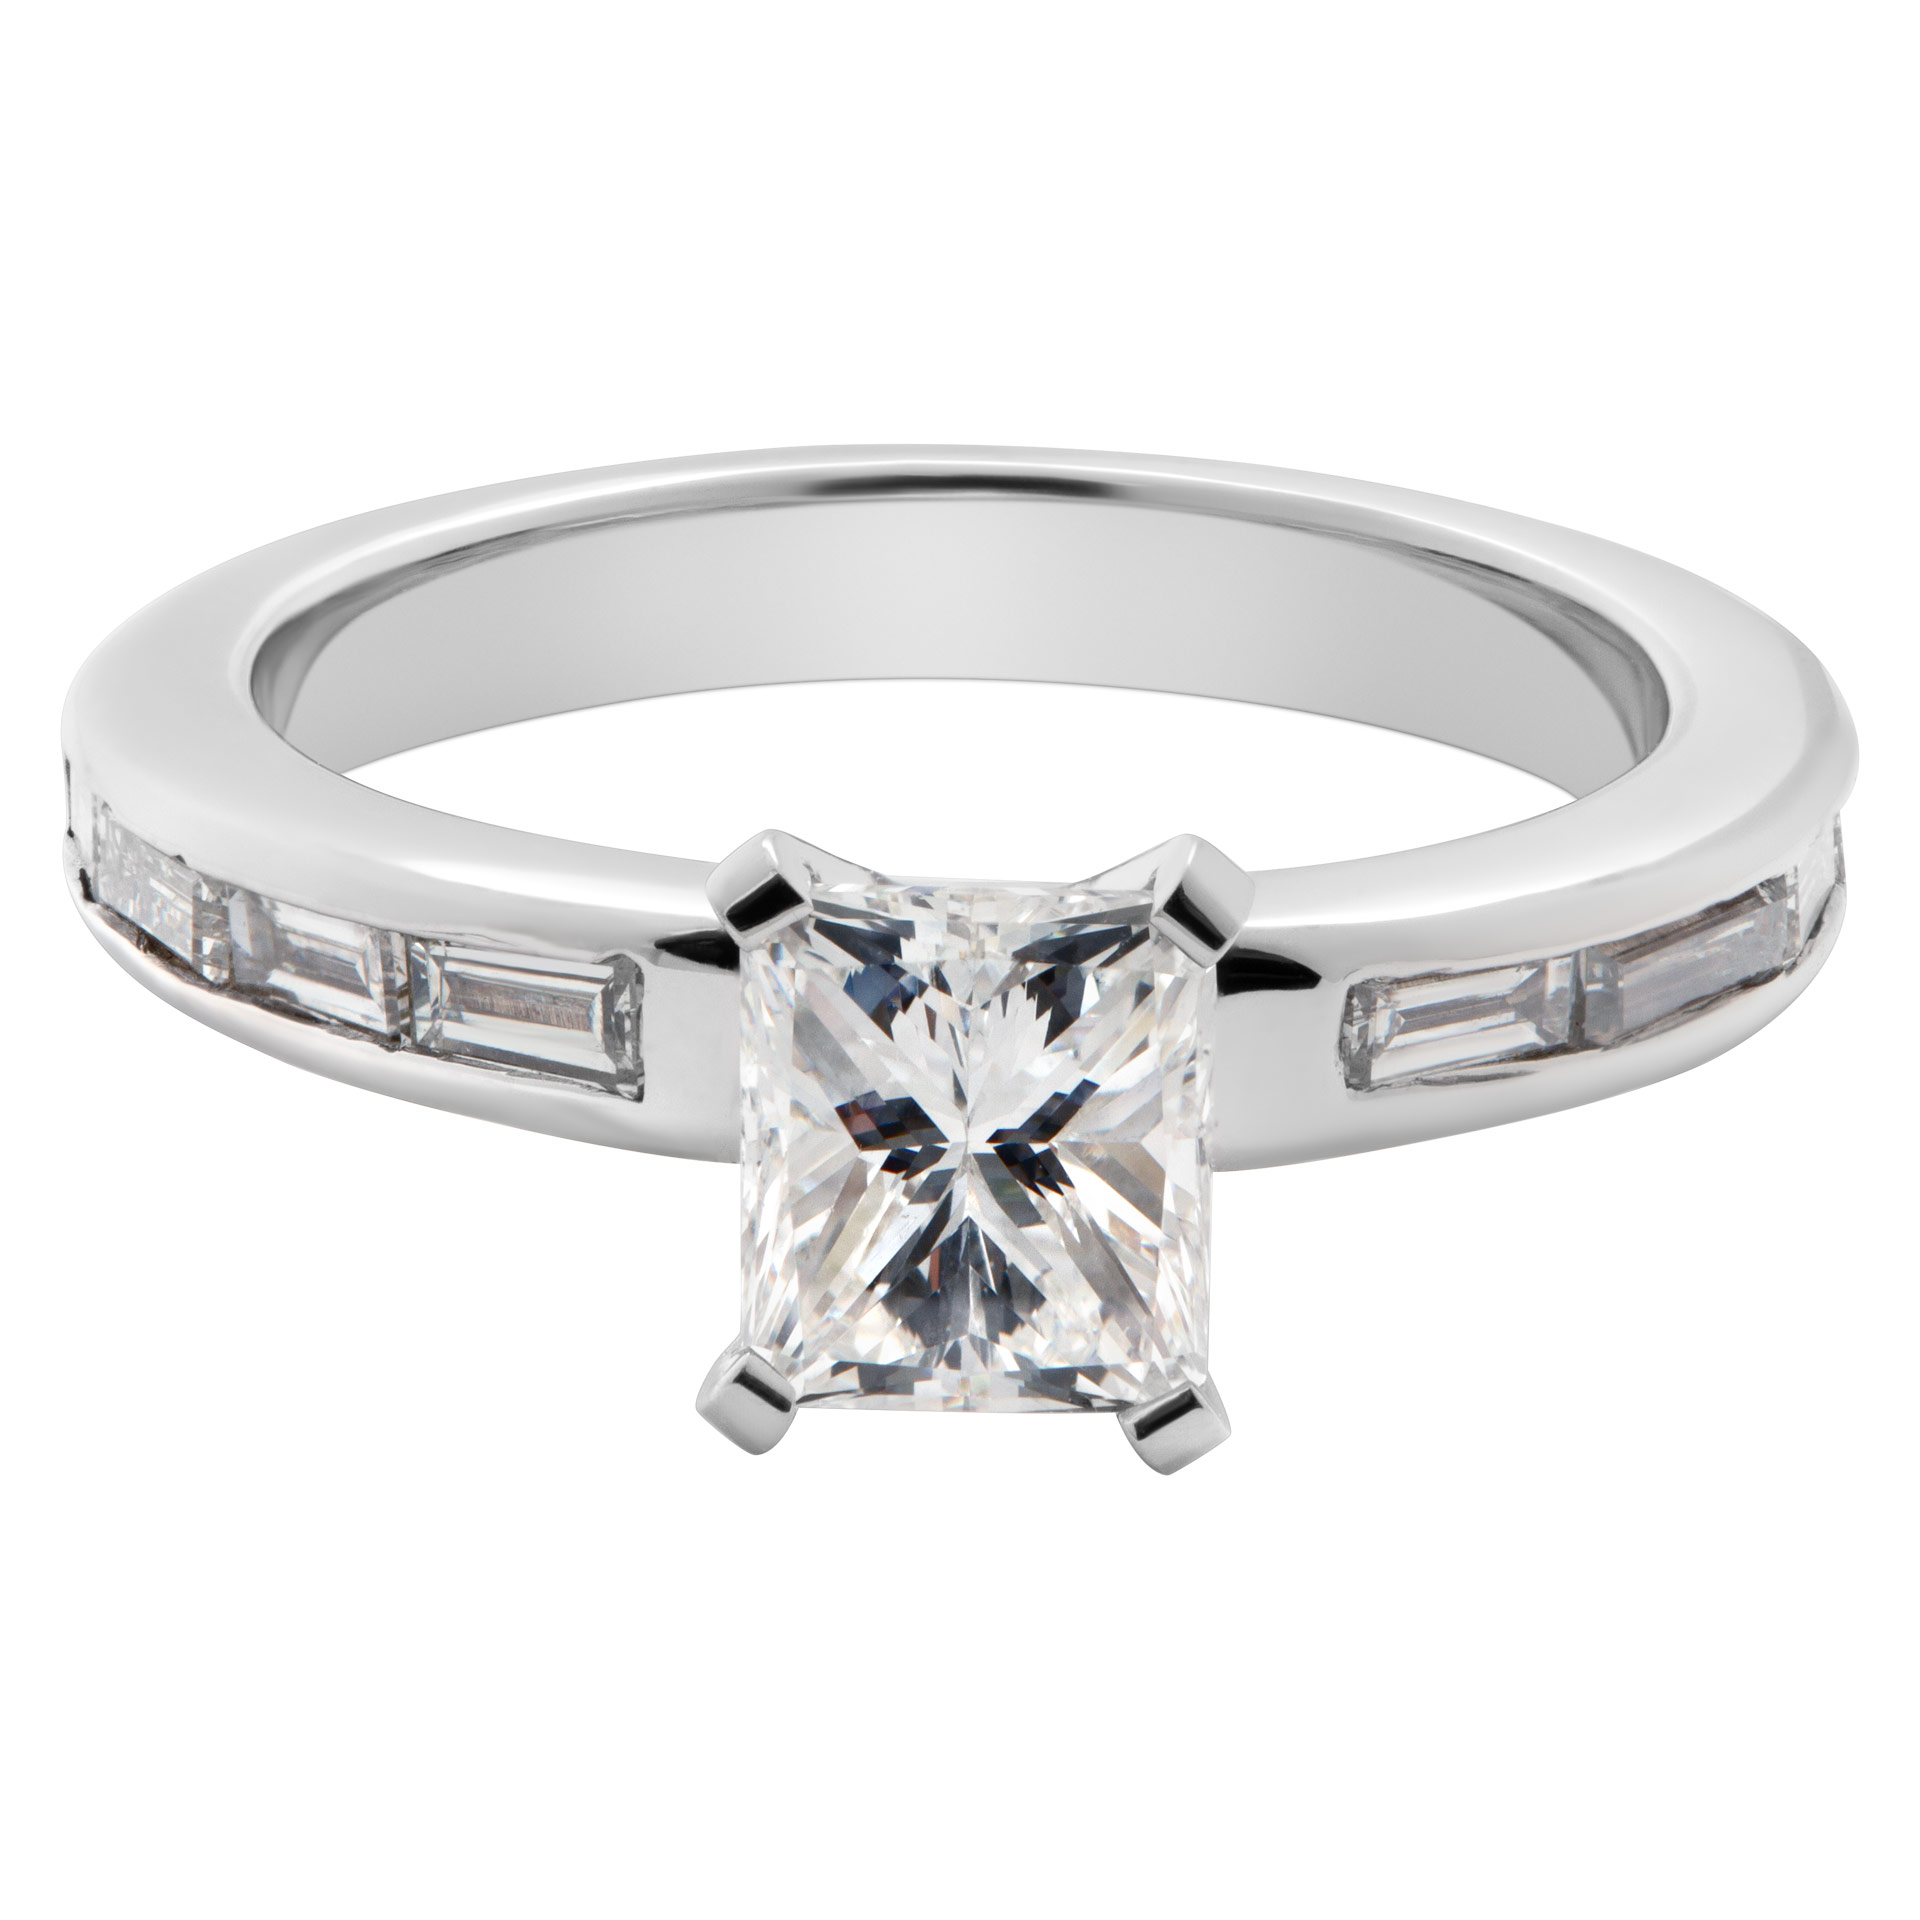 GIA certified cut-cornered rectangular modified brilliant cut diamond ring image 1